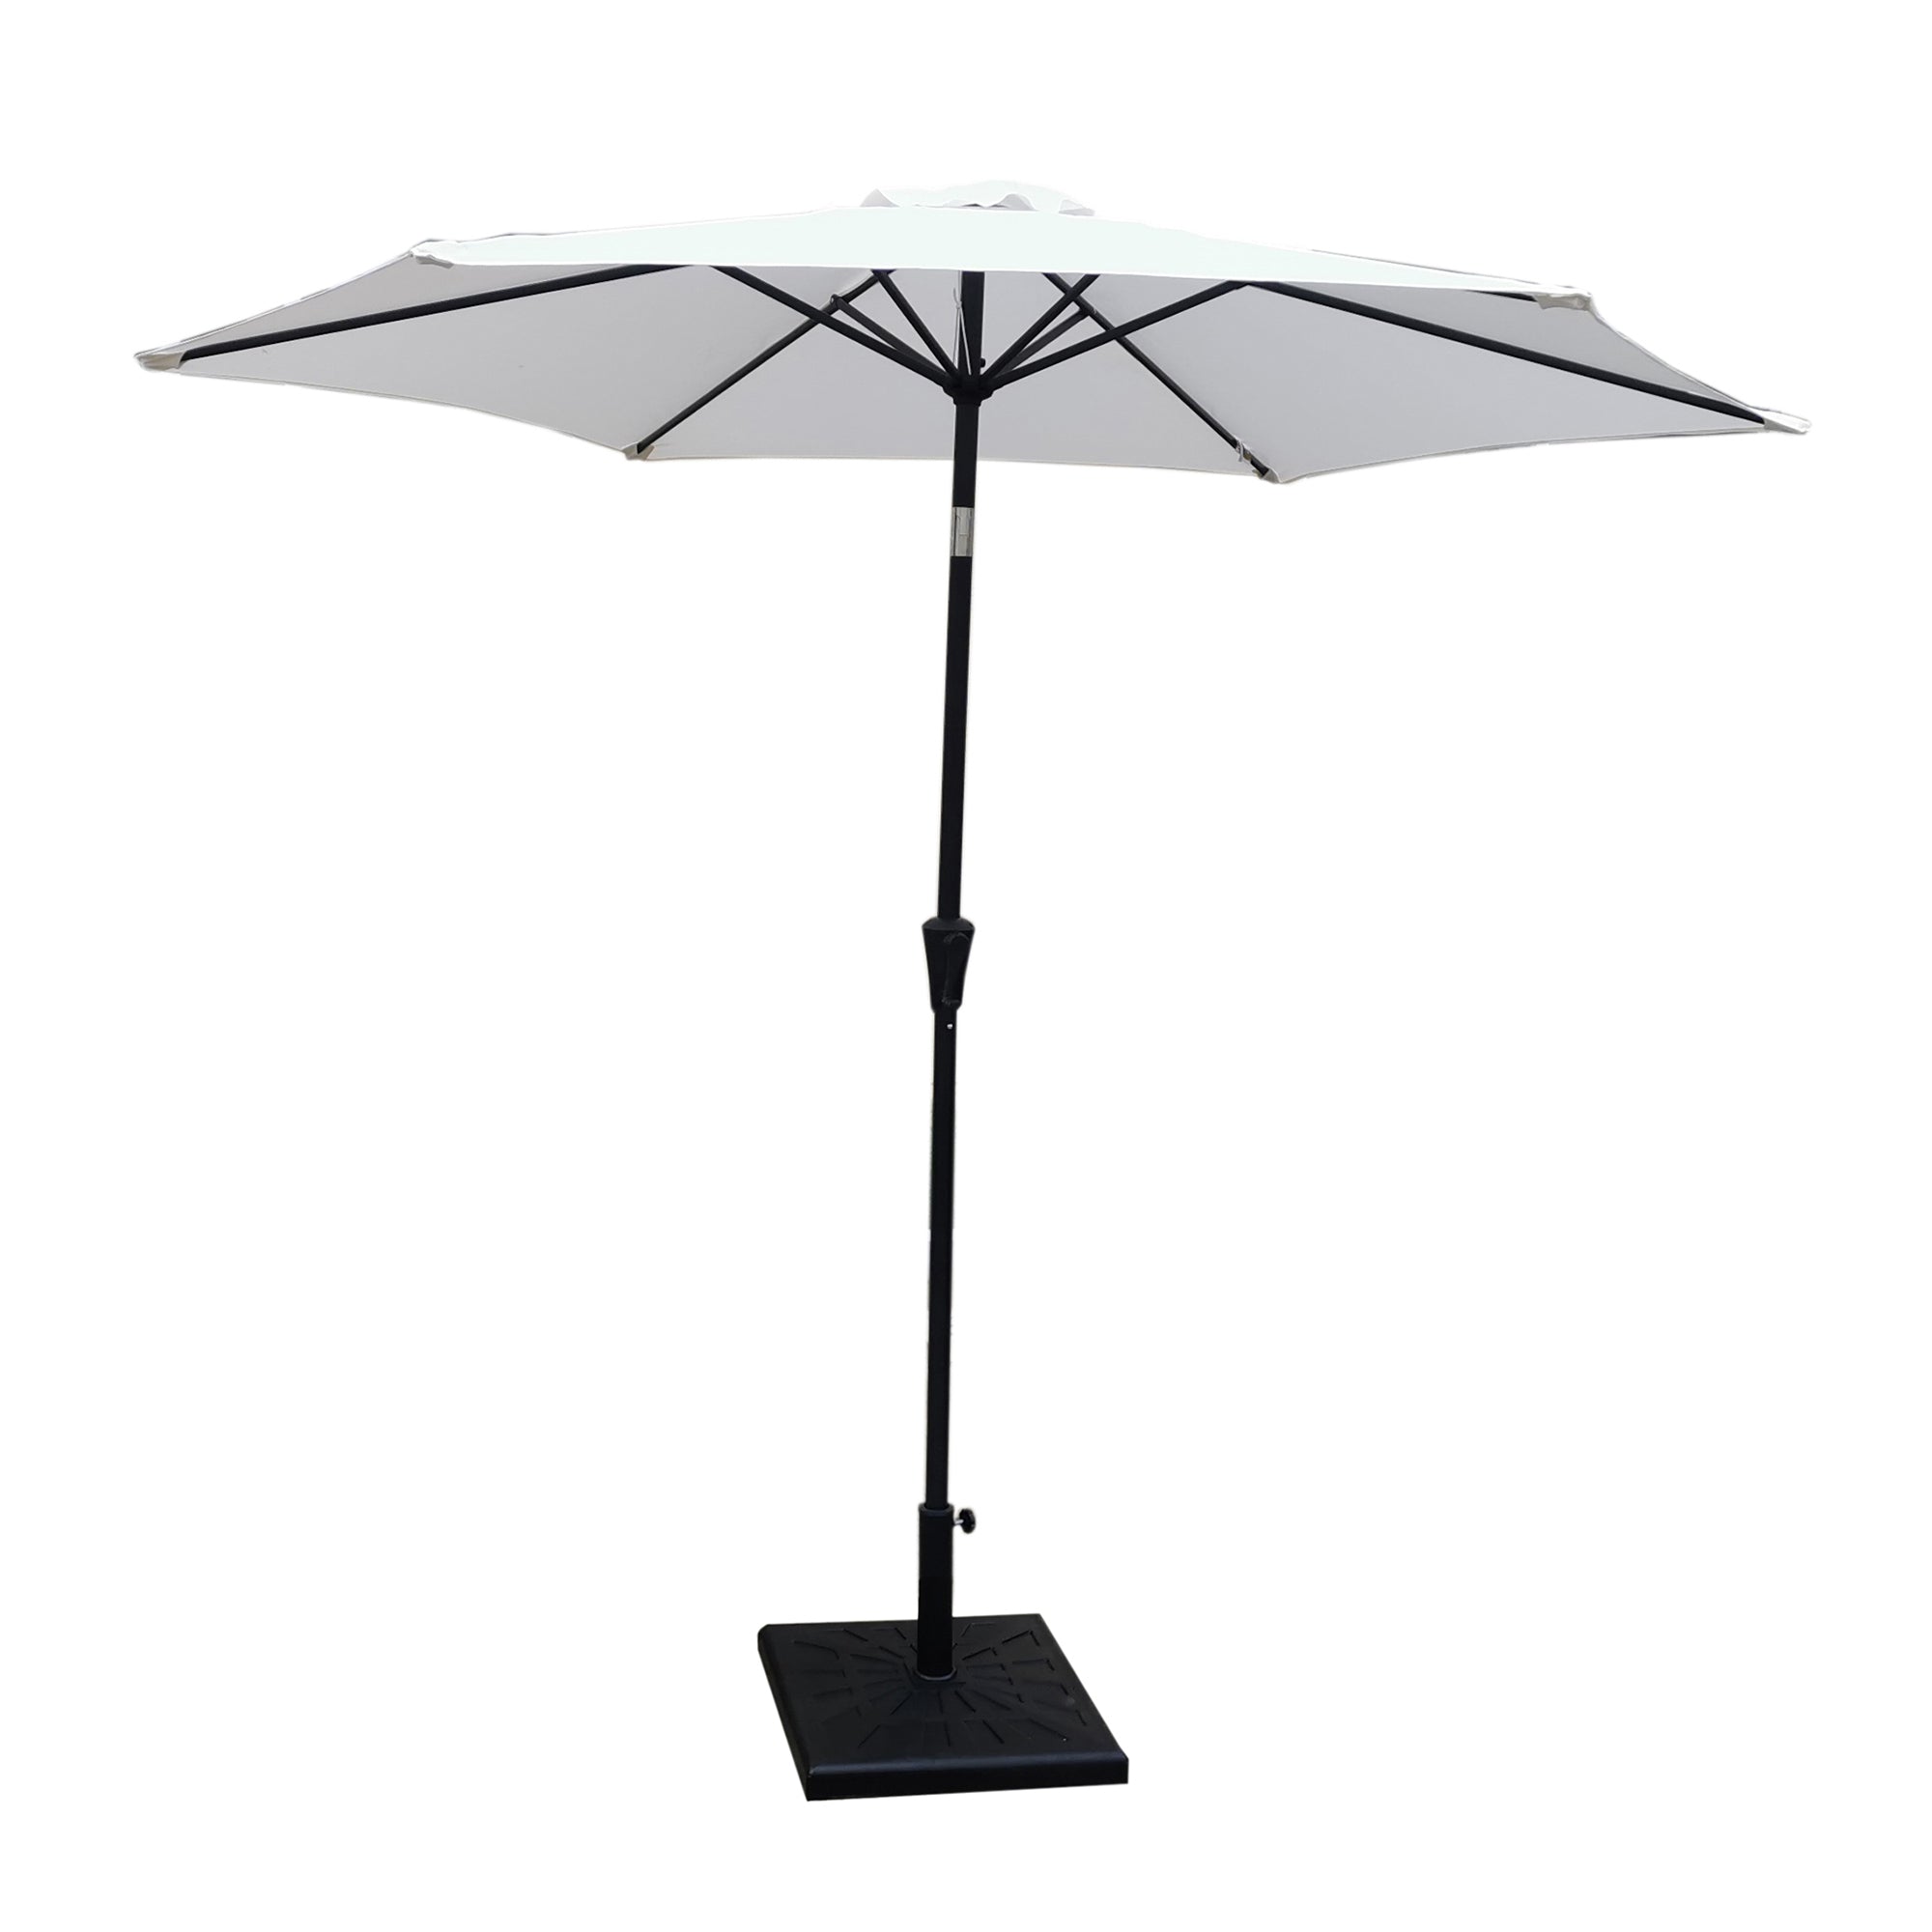 8.8-feet-Outdoor-Aluminum-Patio-Umbrella,-with-42-Pound-Square-Resin-Umbrella-Base,-Push-Button-Tilt-and-Crank-lift,-Creme-